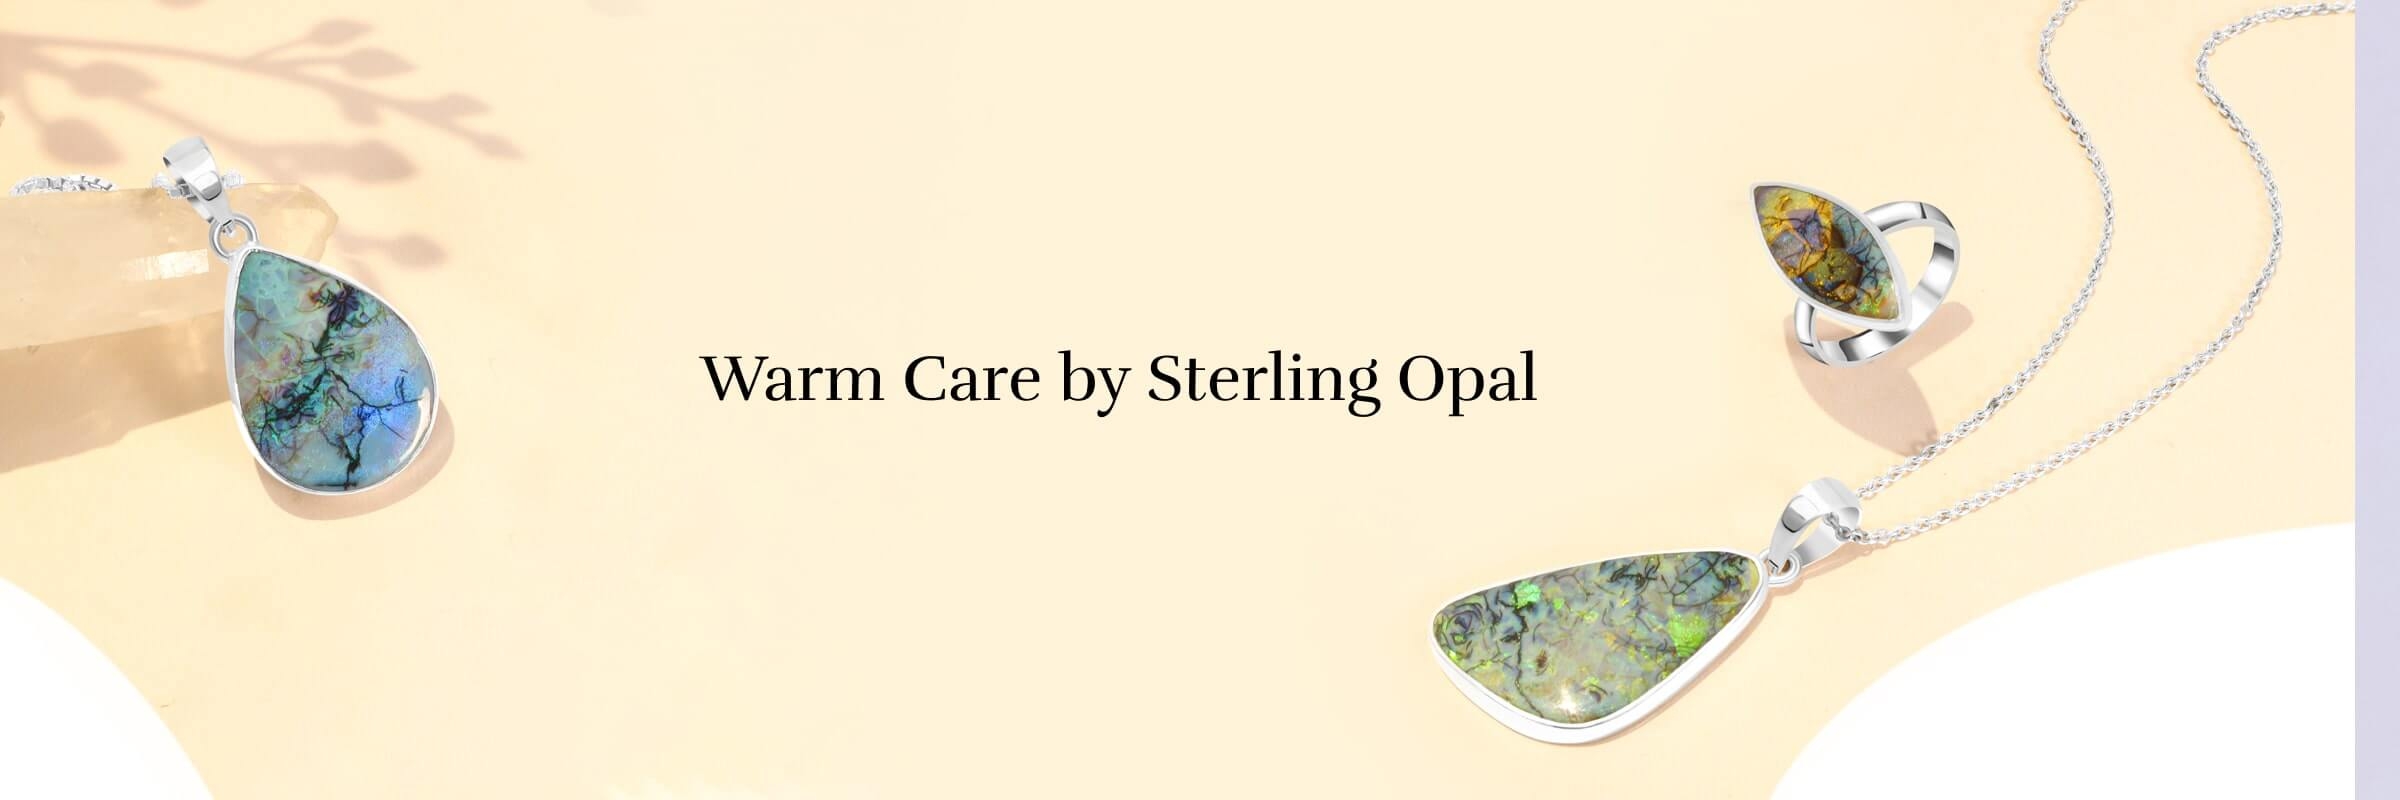 Healing Properties of Sterling Opal